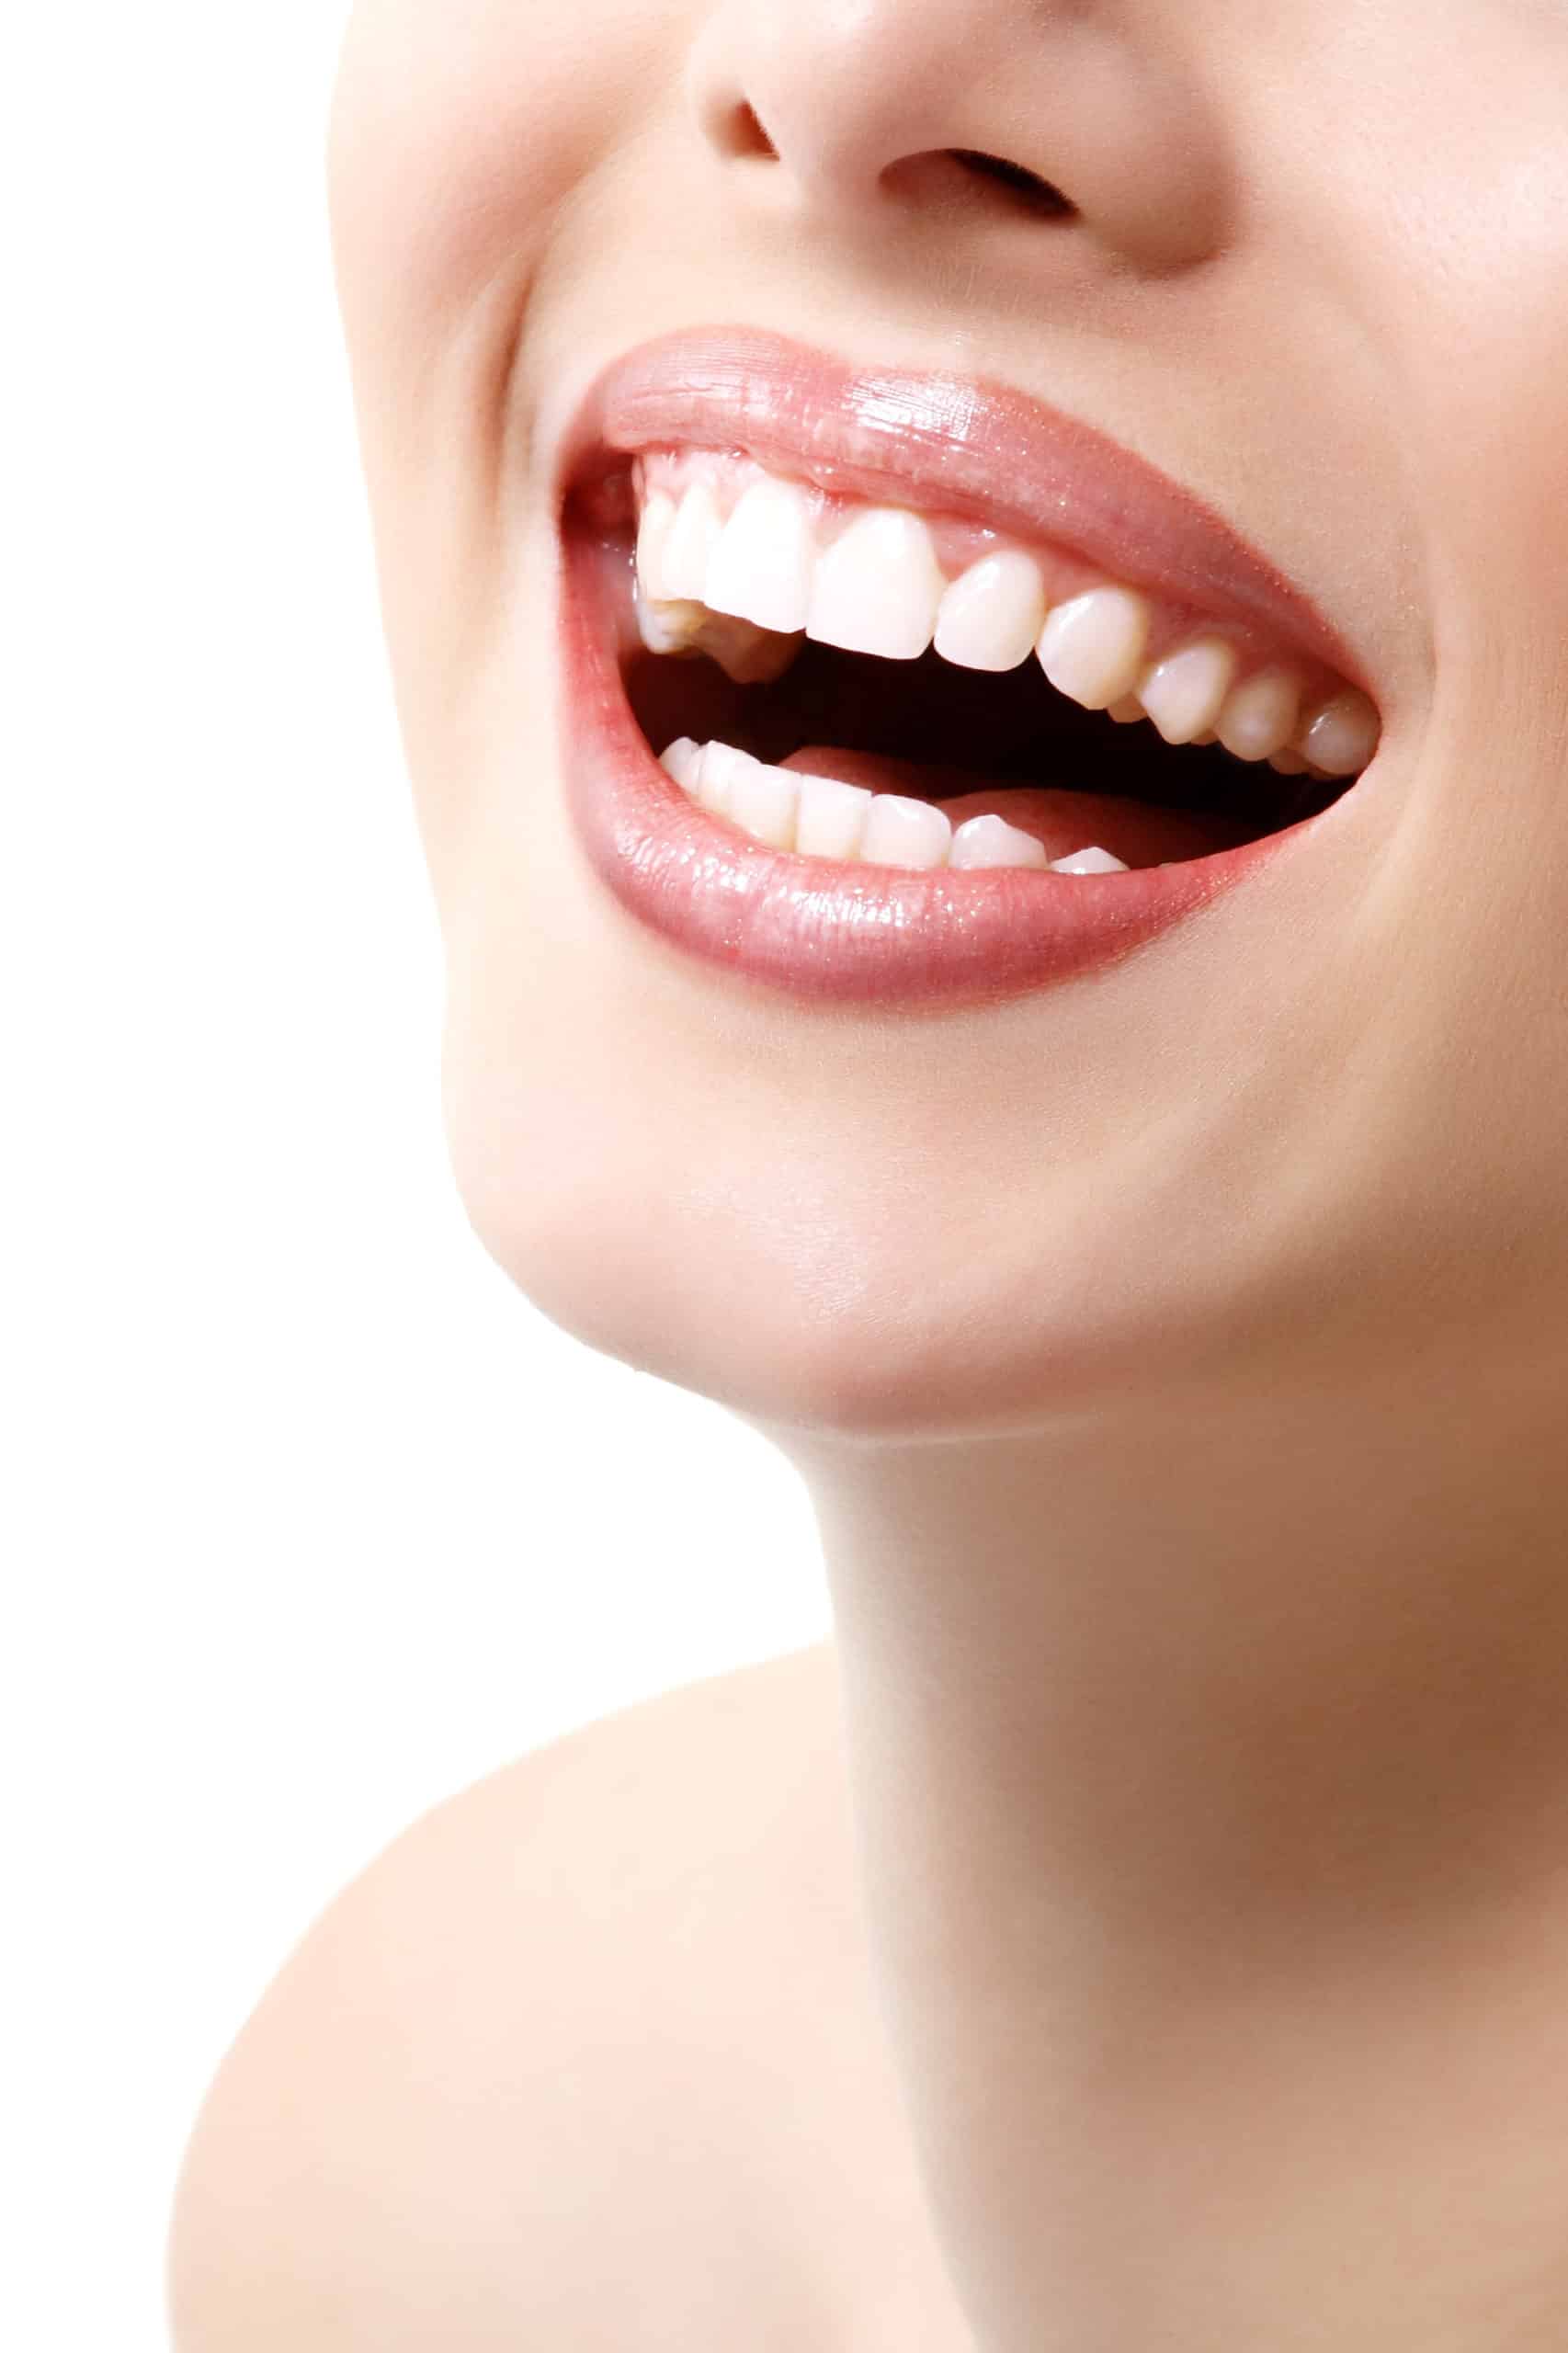 strengthen your gums